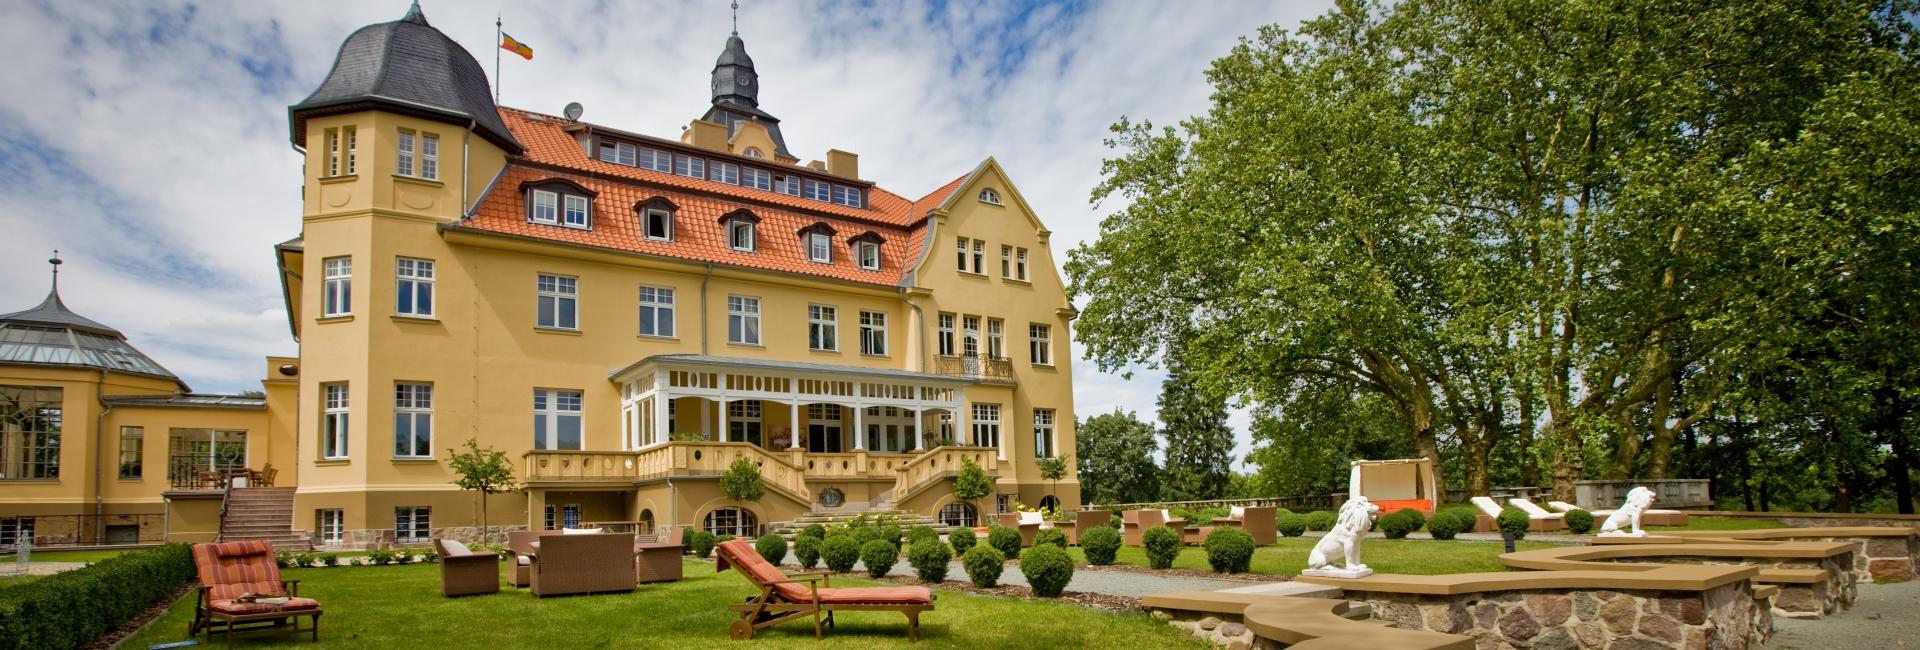 Castle Hotel Wendorf